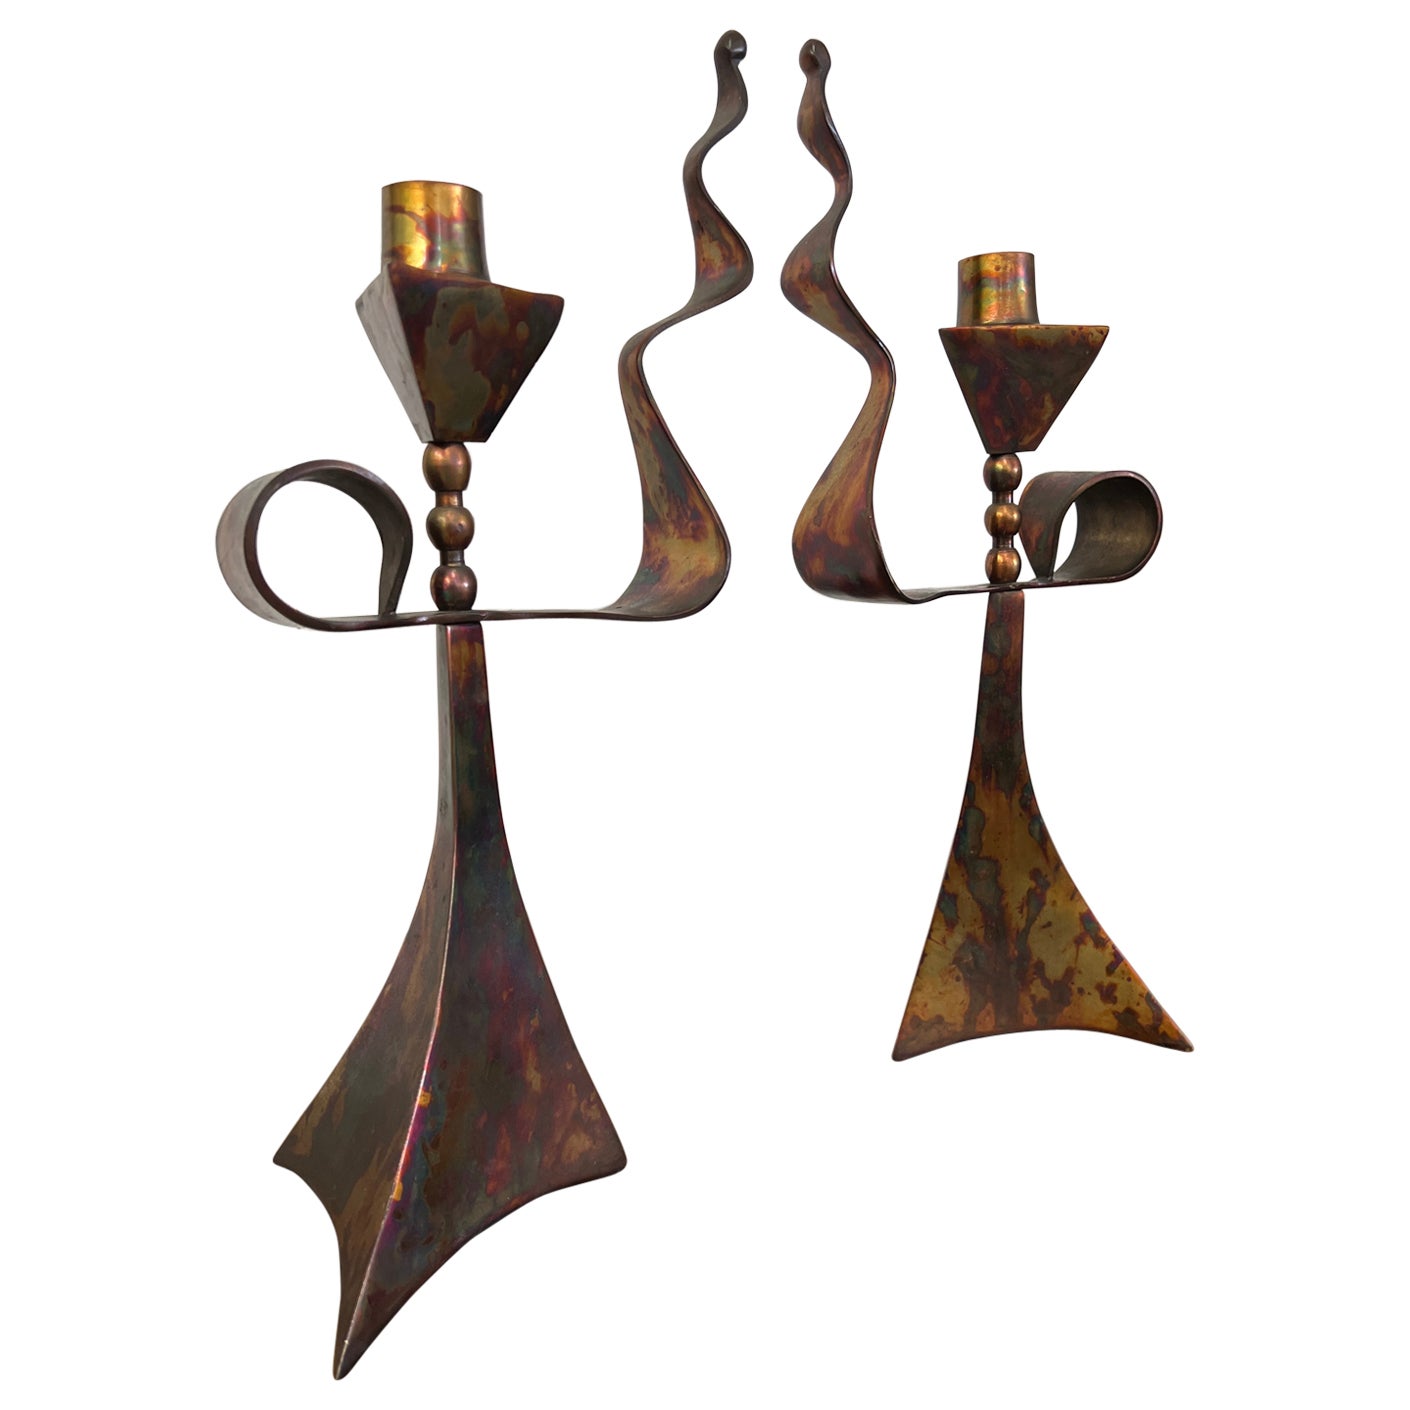 Modernist Triangular Copper Candlesticks